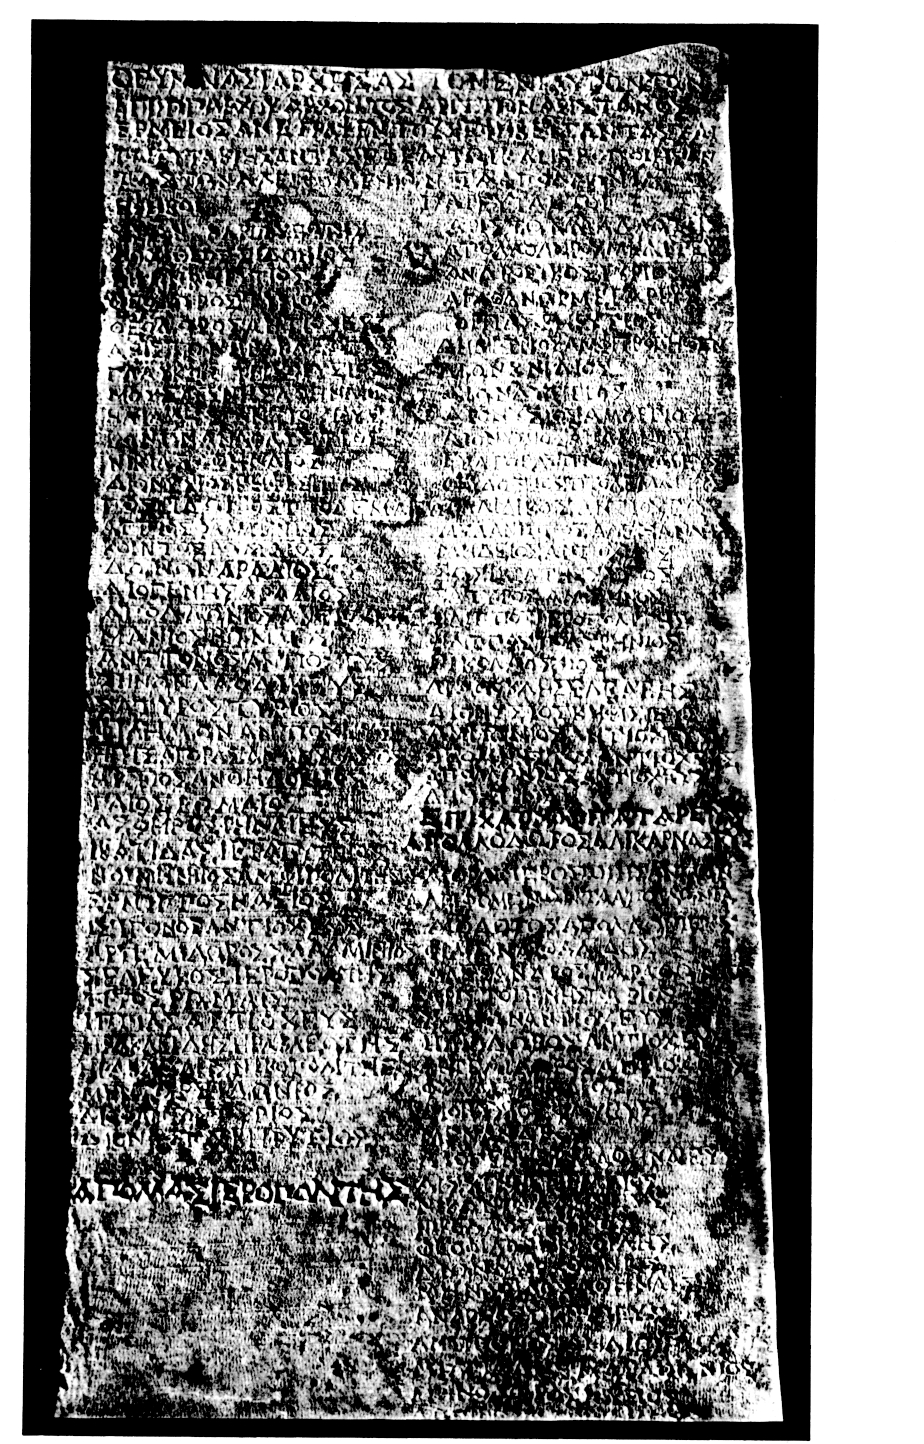 An inscribed list of former ephebes, paruetaktoi and aleiphomenoi from Delos, 119/8 BCE (Inscriptiones de Delos 2598). © Roussel 1931, “La population de Délos”, BCH 55, pp. 438-449, pl. XVIII.